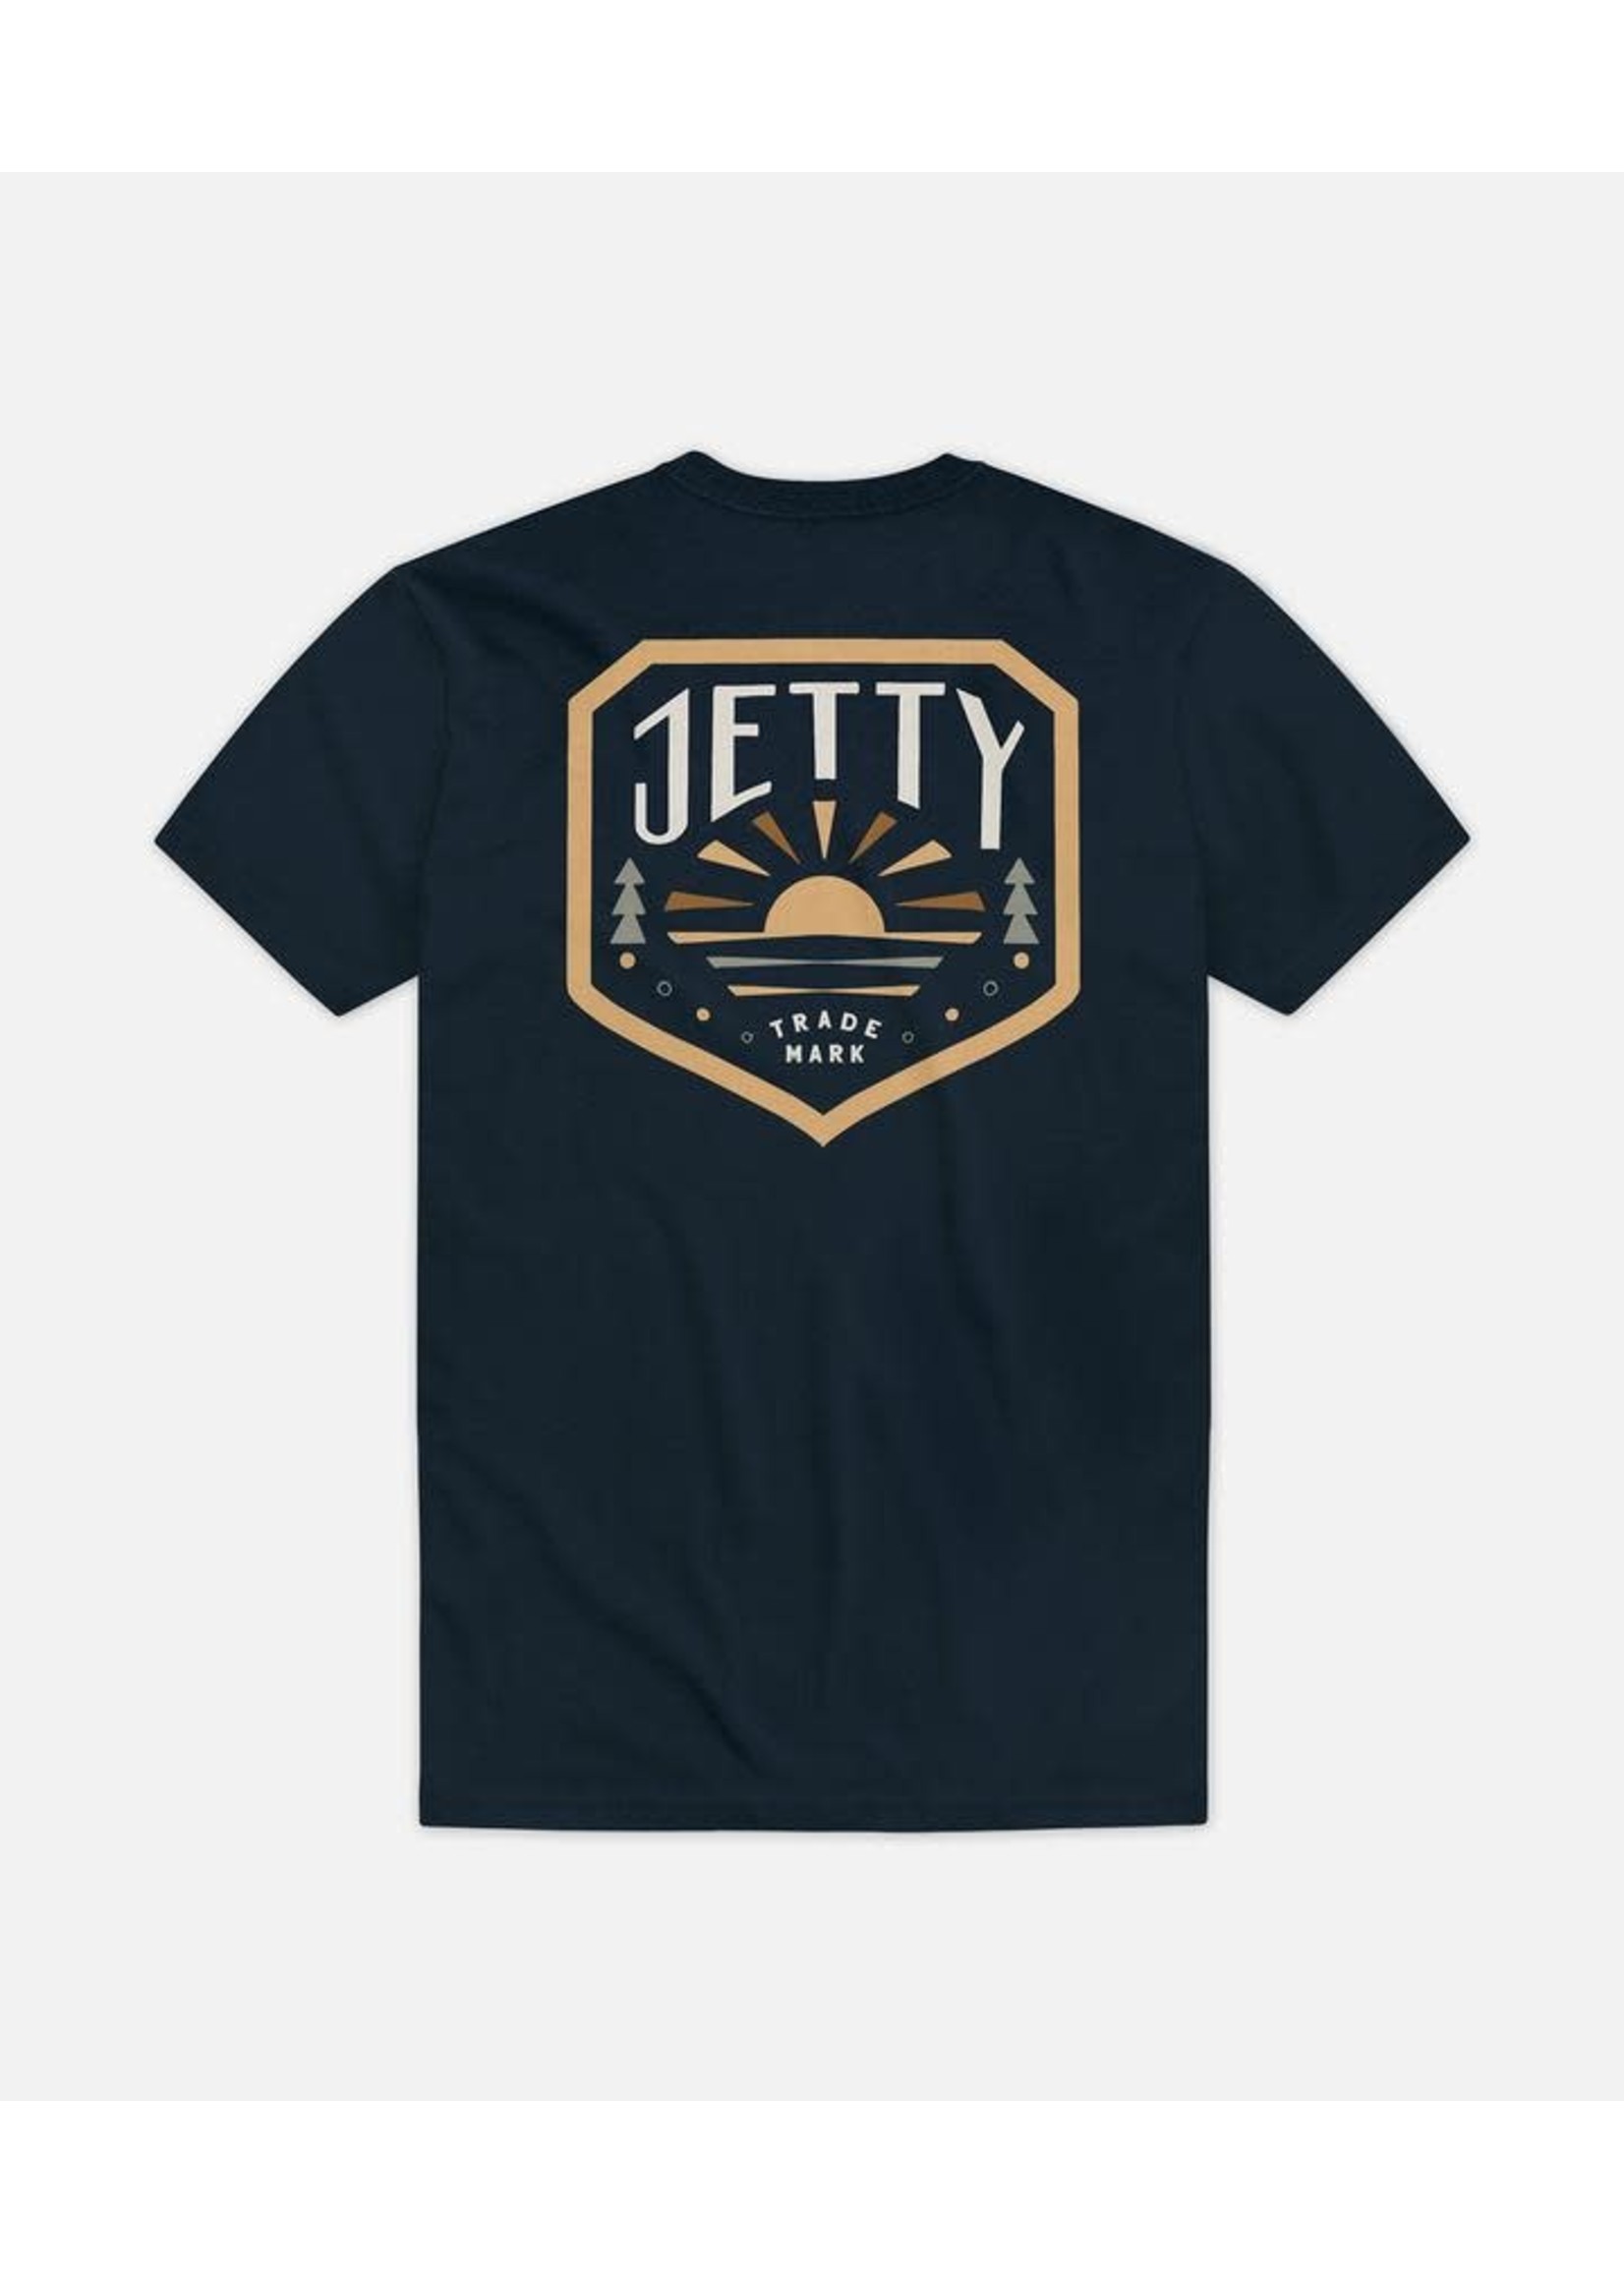 Jetty Ranger Tee